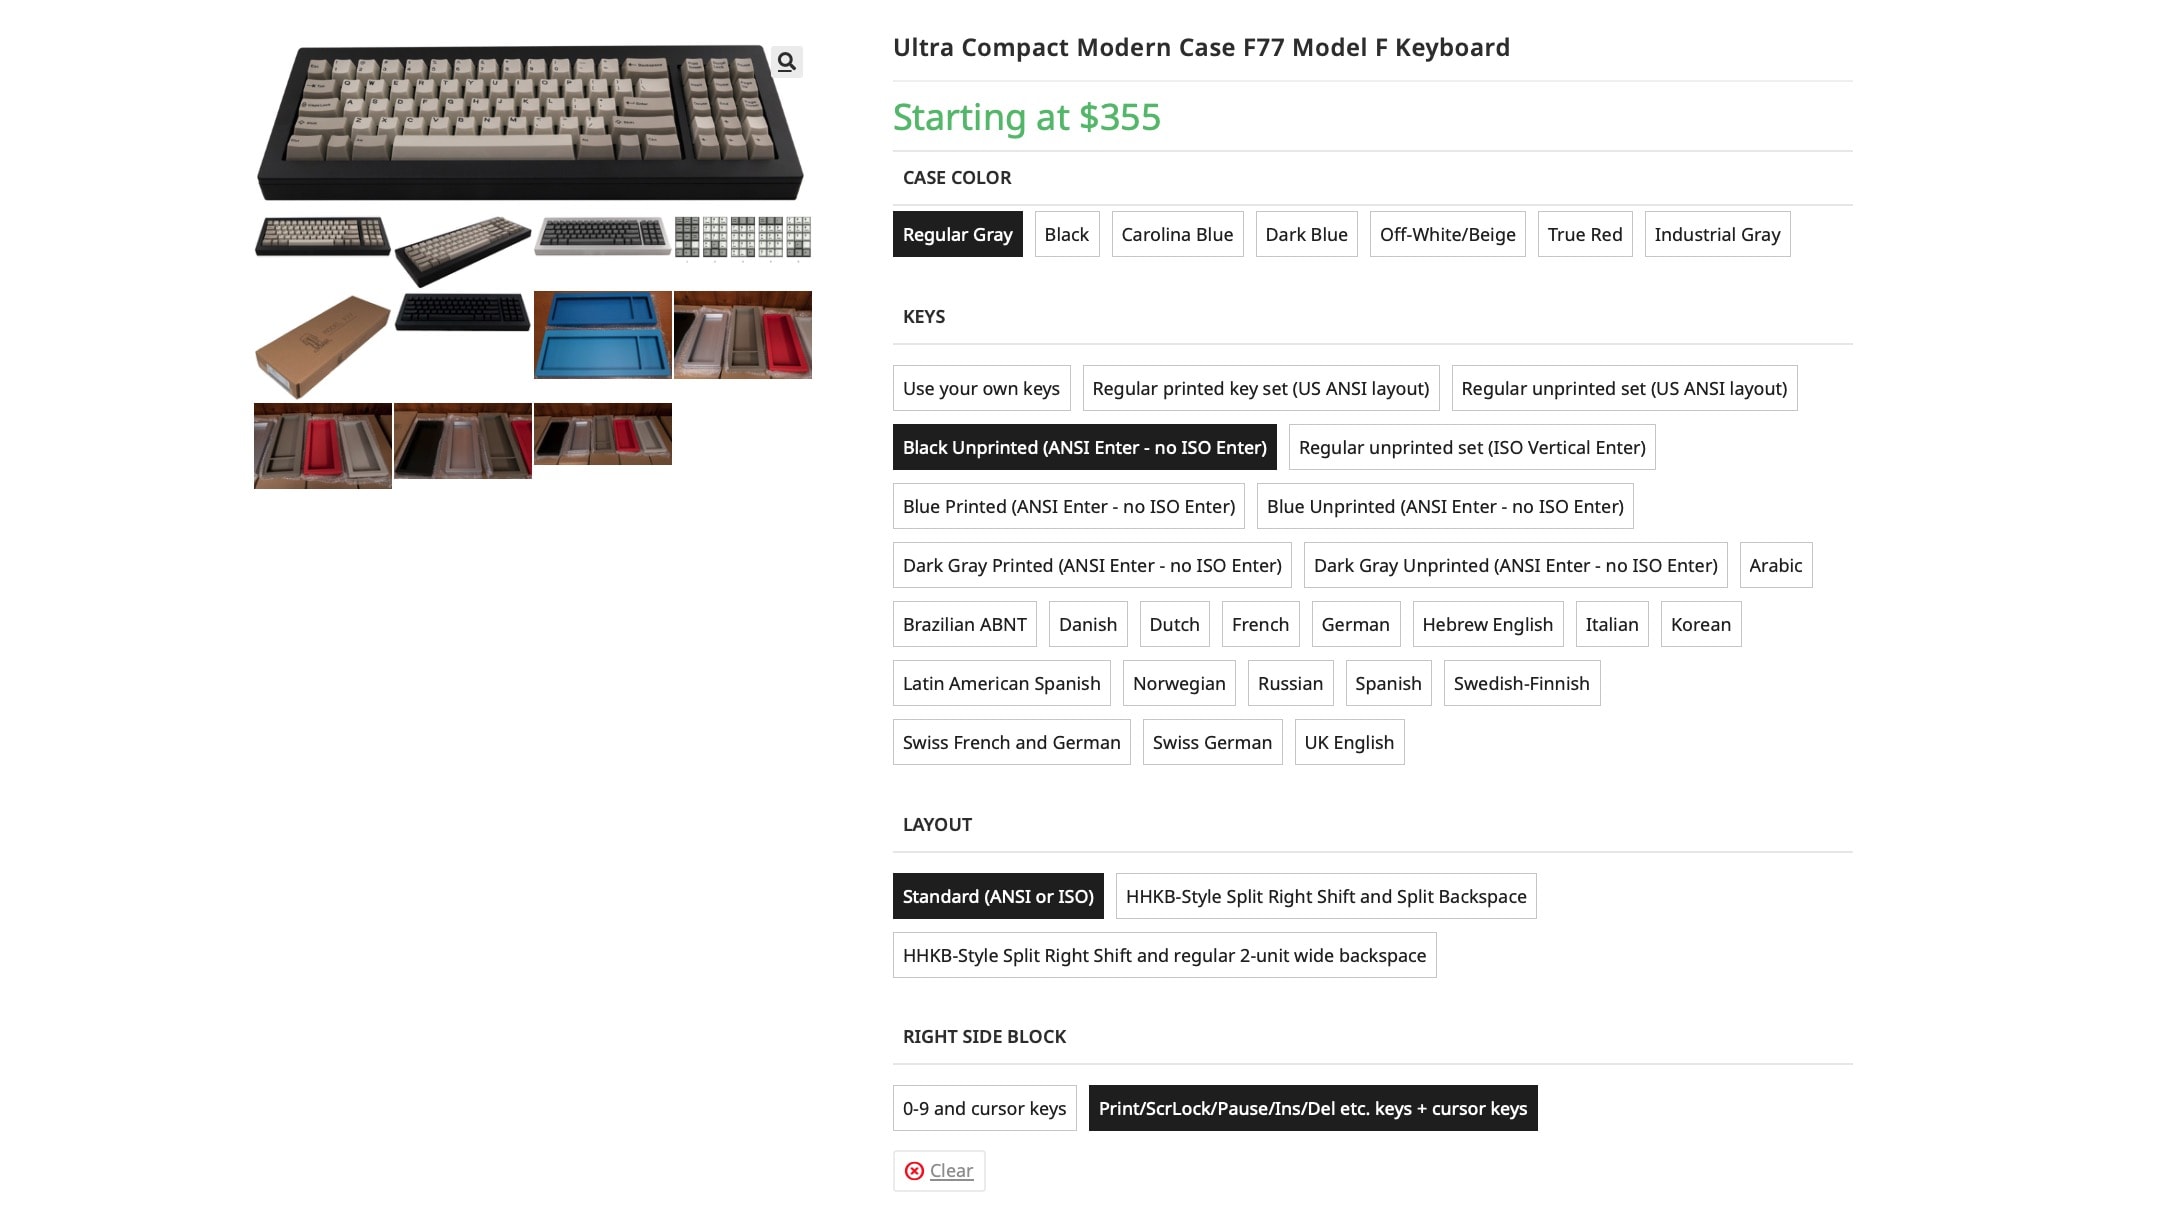 Ordering a Model F keyboard